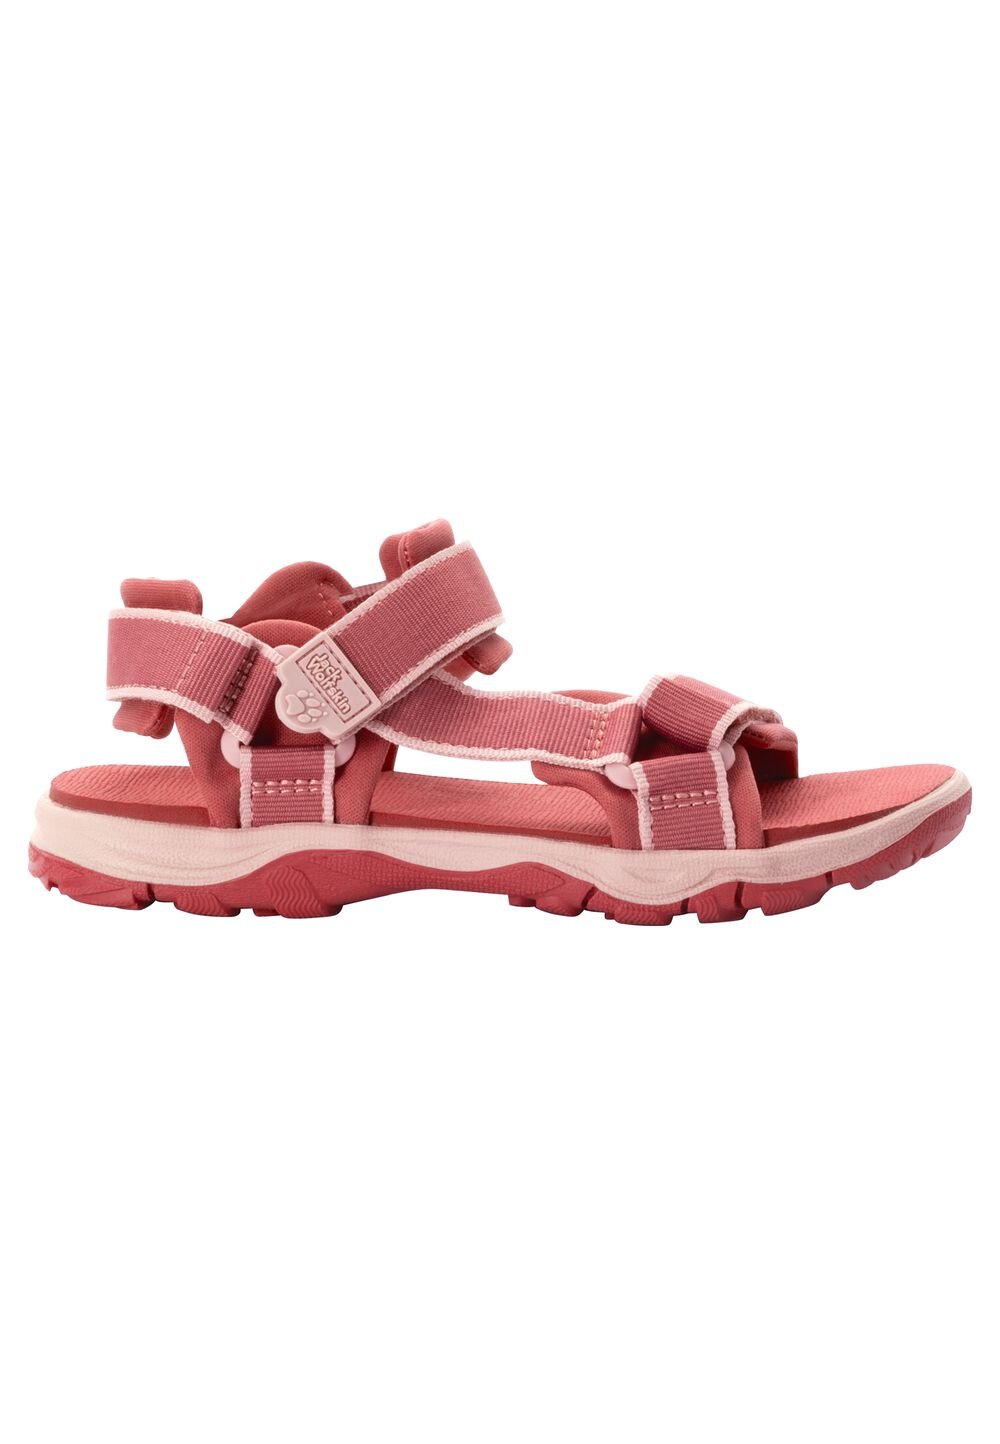 Jack Wolfskin Seven Seas 3 Kids Kinderen sandalen 26 soft pink soft pink